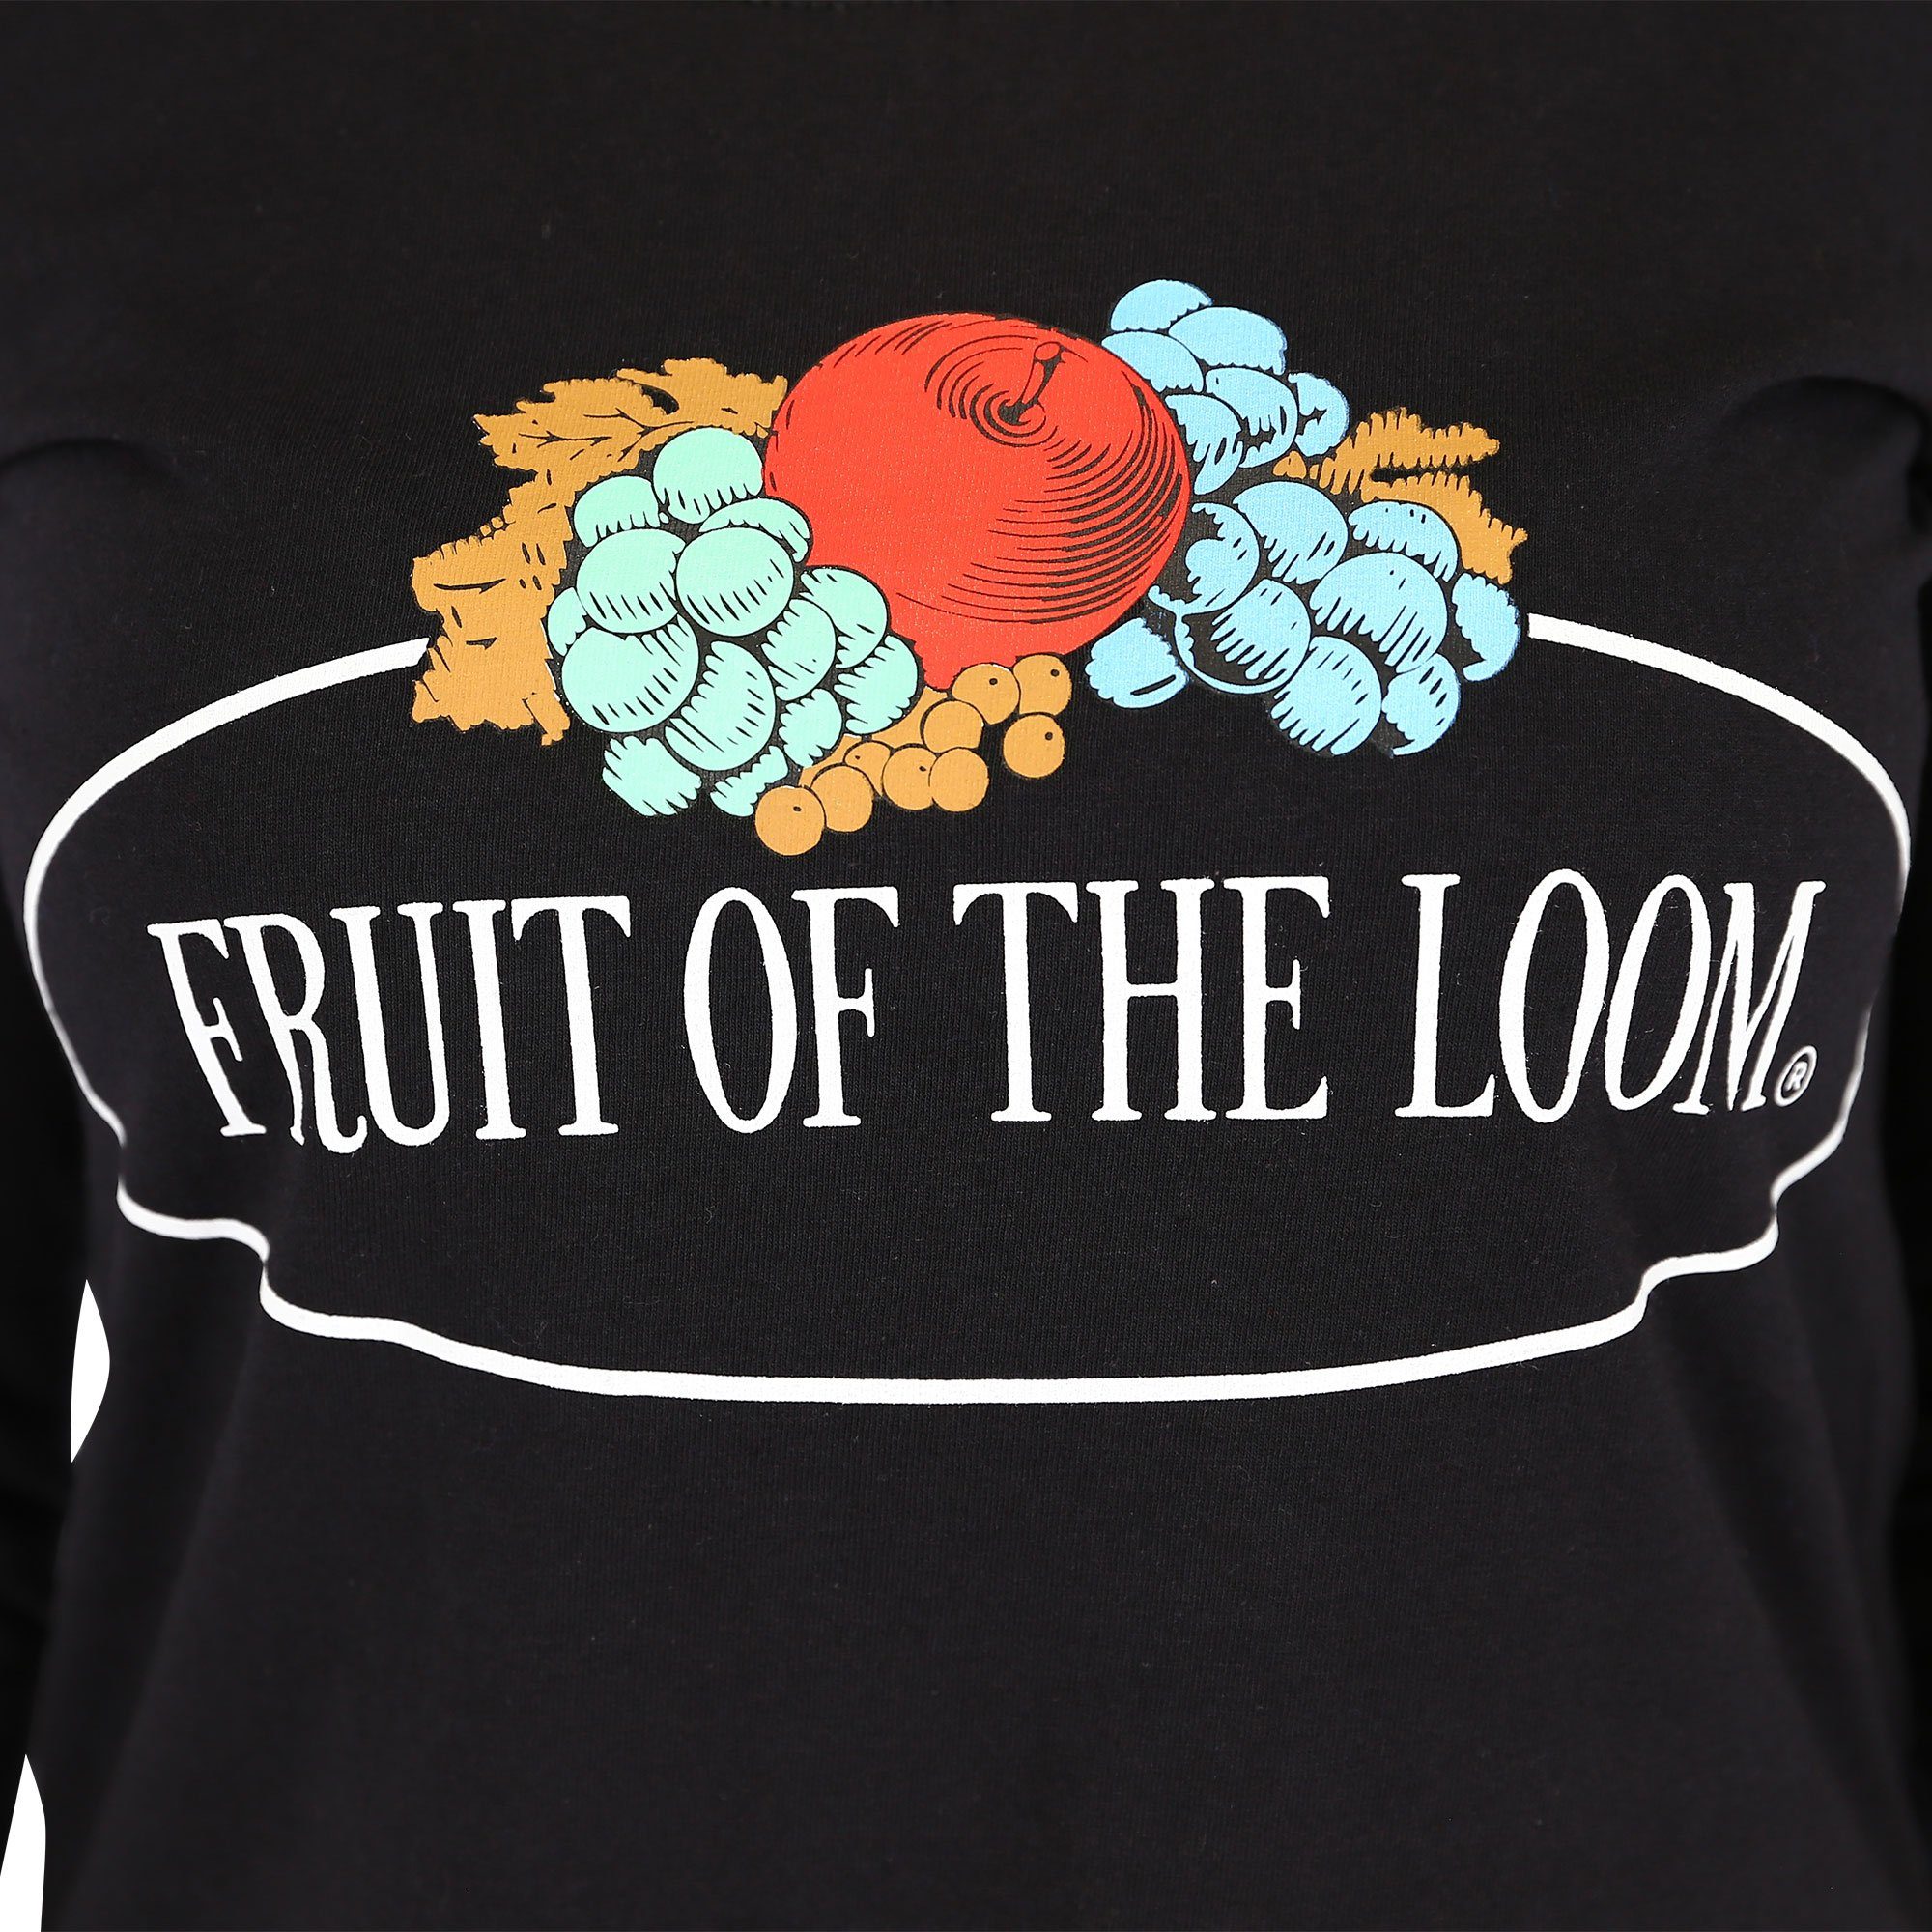 Damen Longsleeve T-Shirt of Fruit Langarm mit Loom Vintage-Logo the